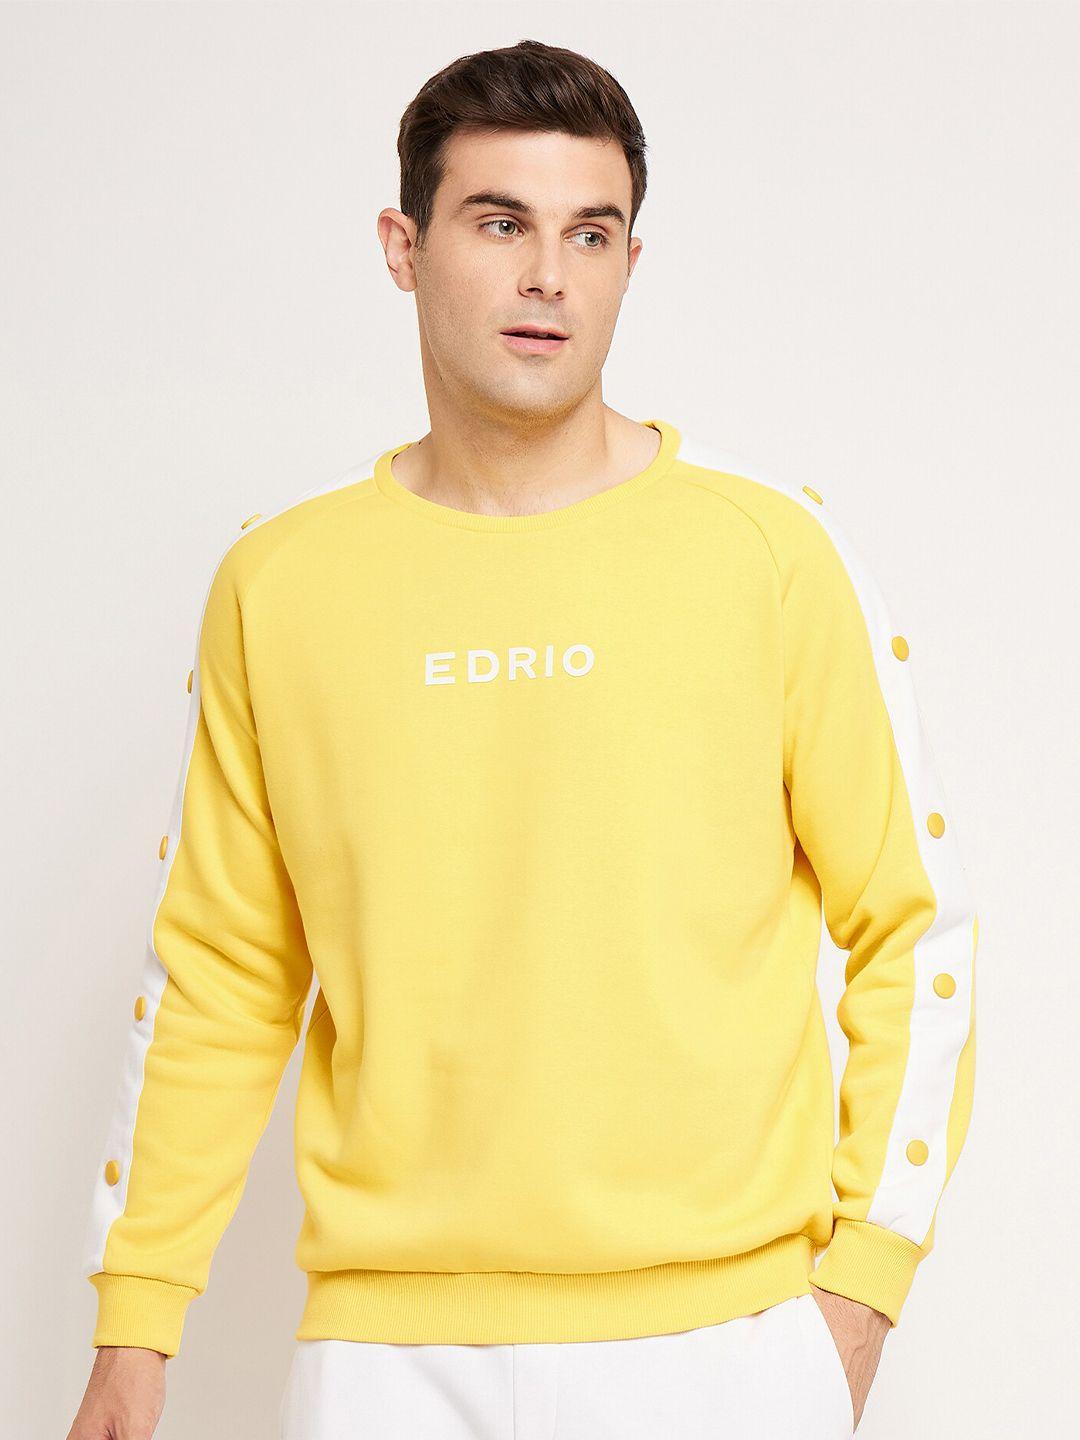 edrio typography printed round neck sweatshirt